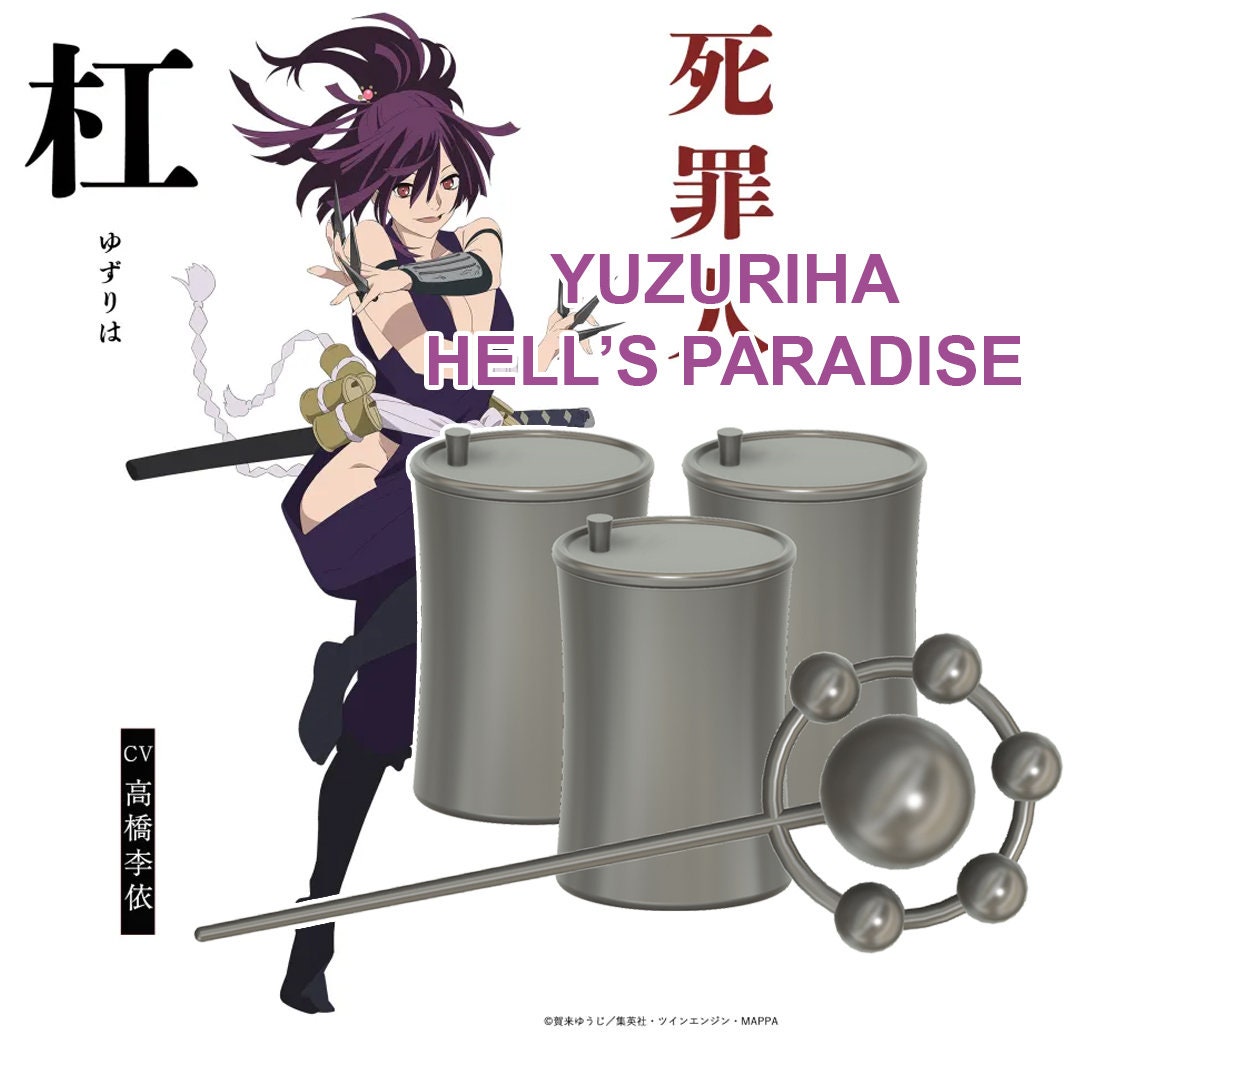 Hell's Paradise DXF-Yuzuriha-, Hell's Paradise